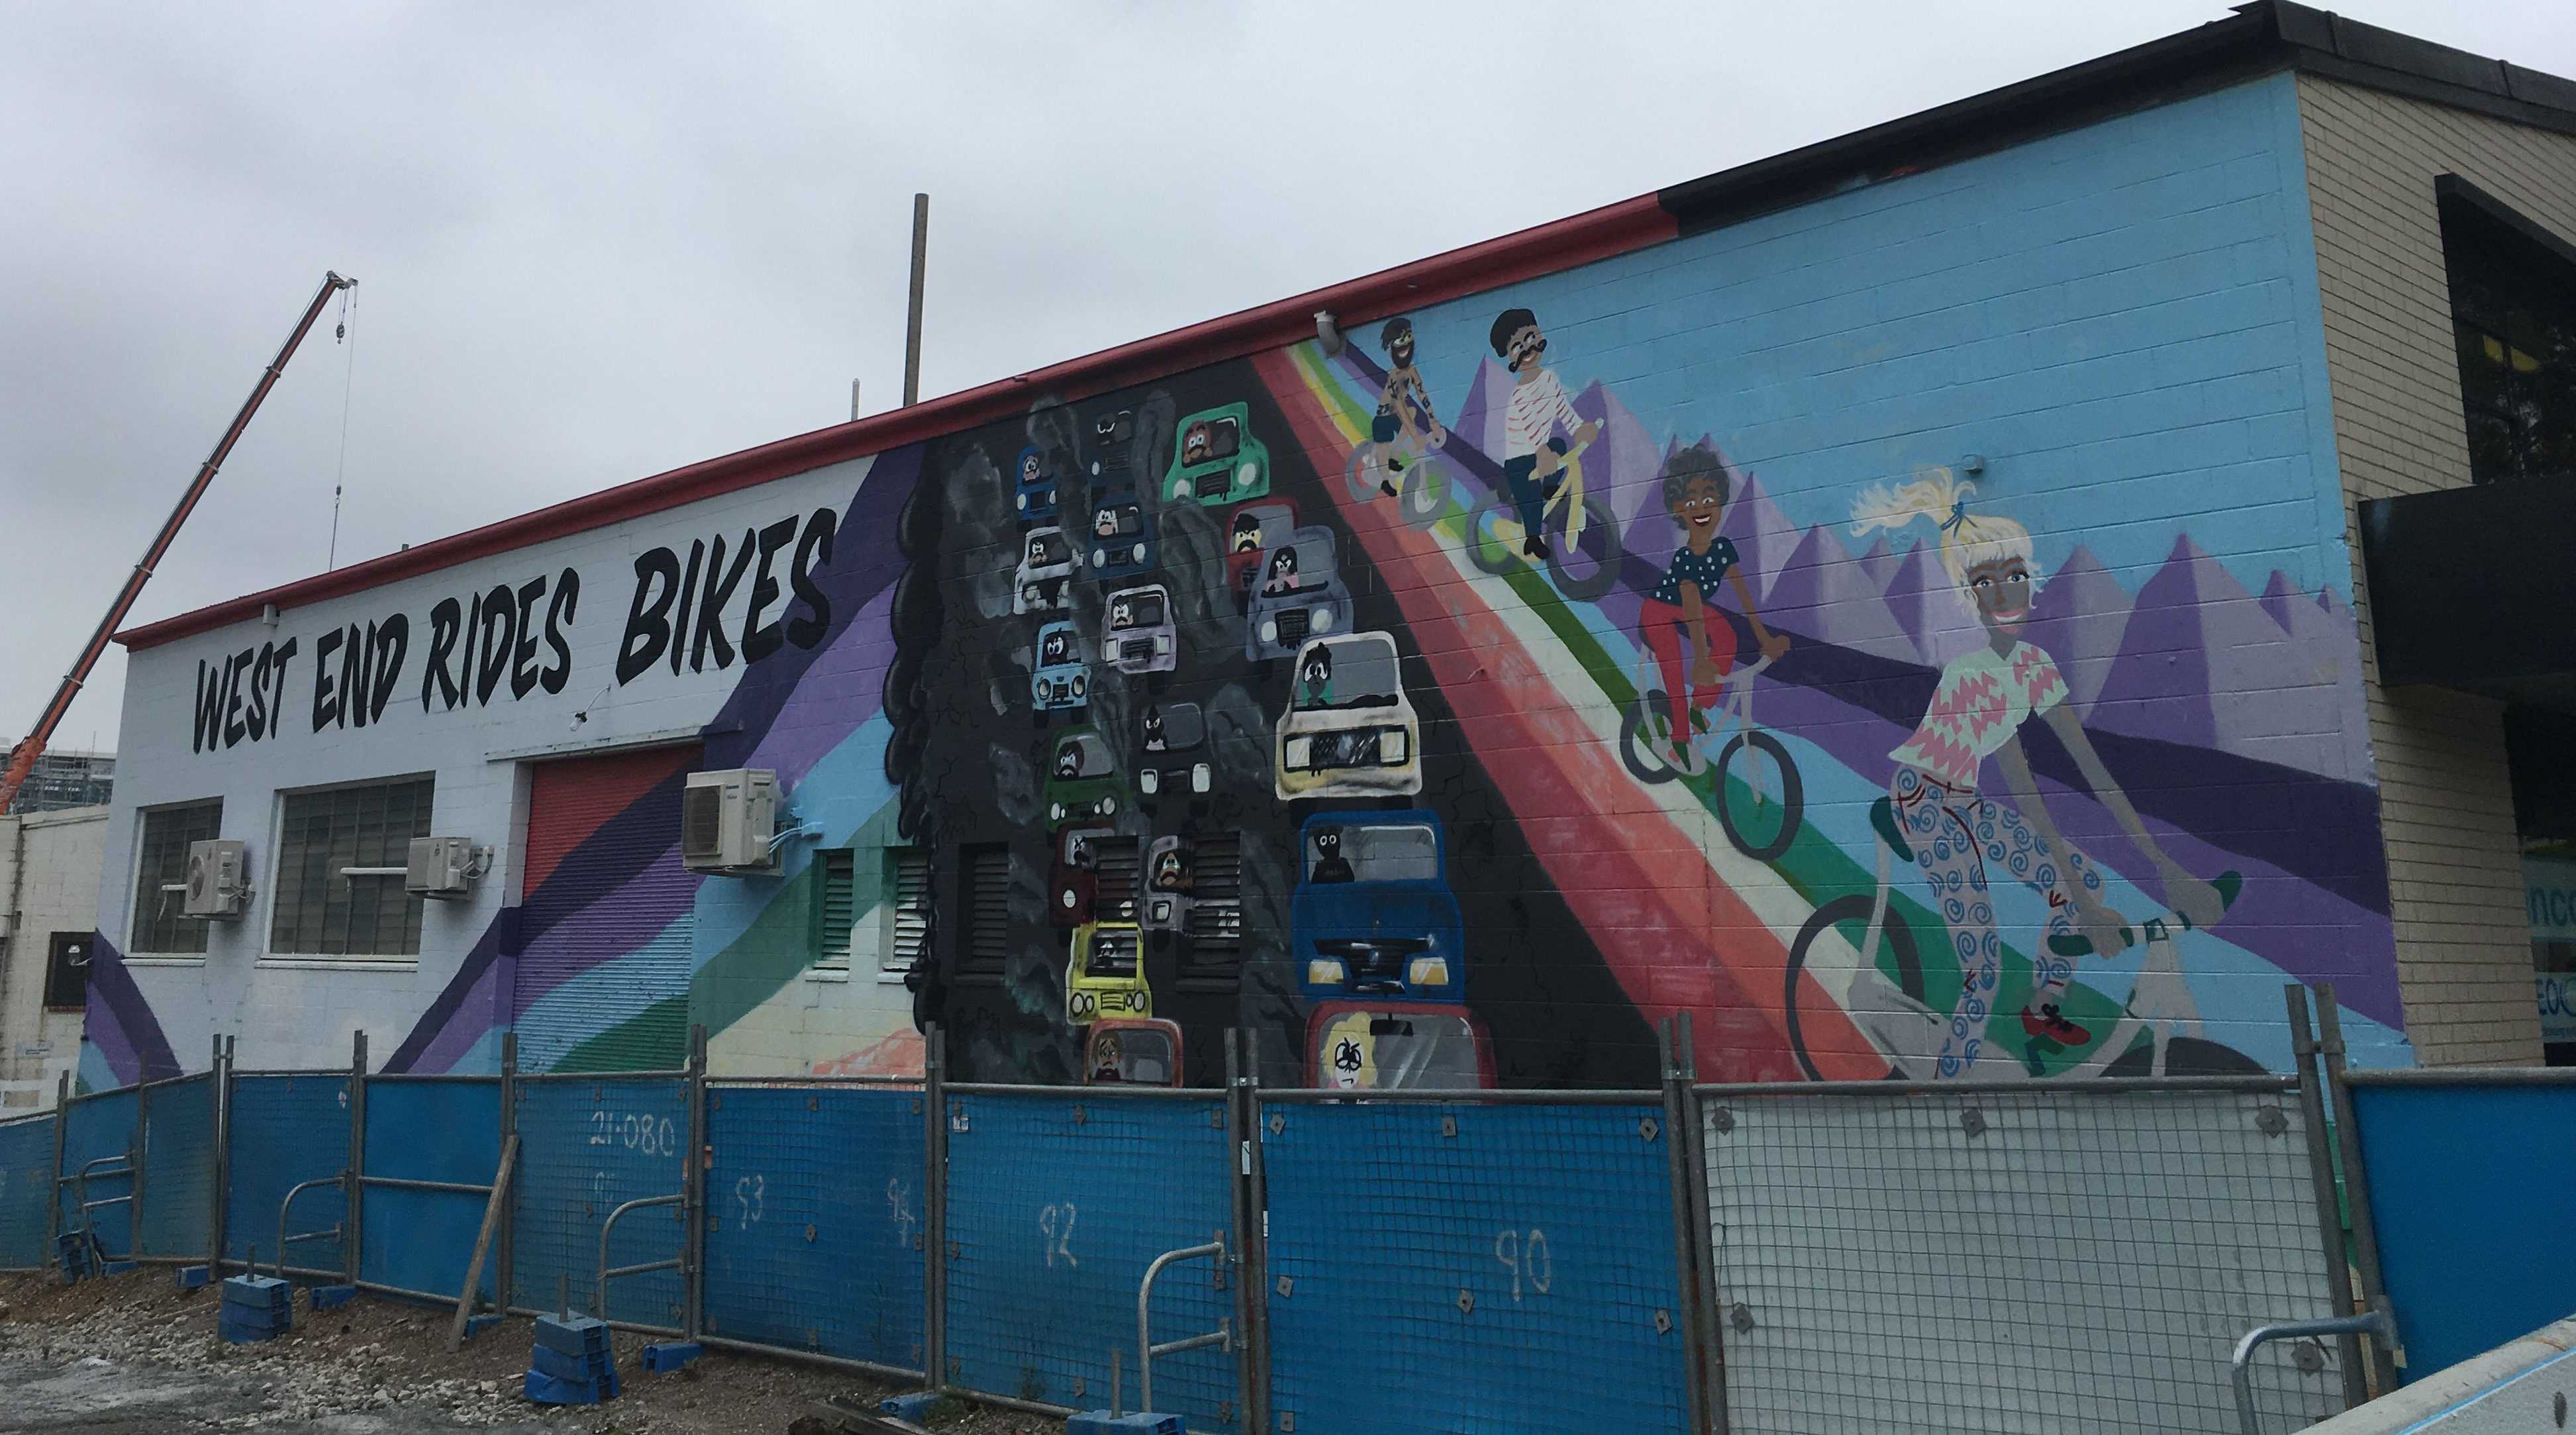 "West End Rides Bikes" mural - West End